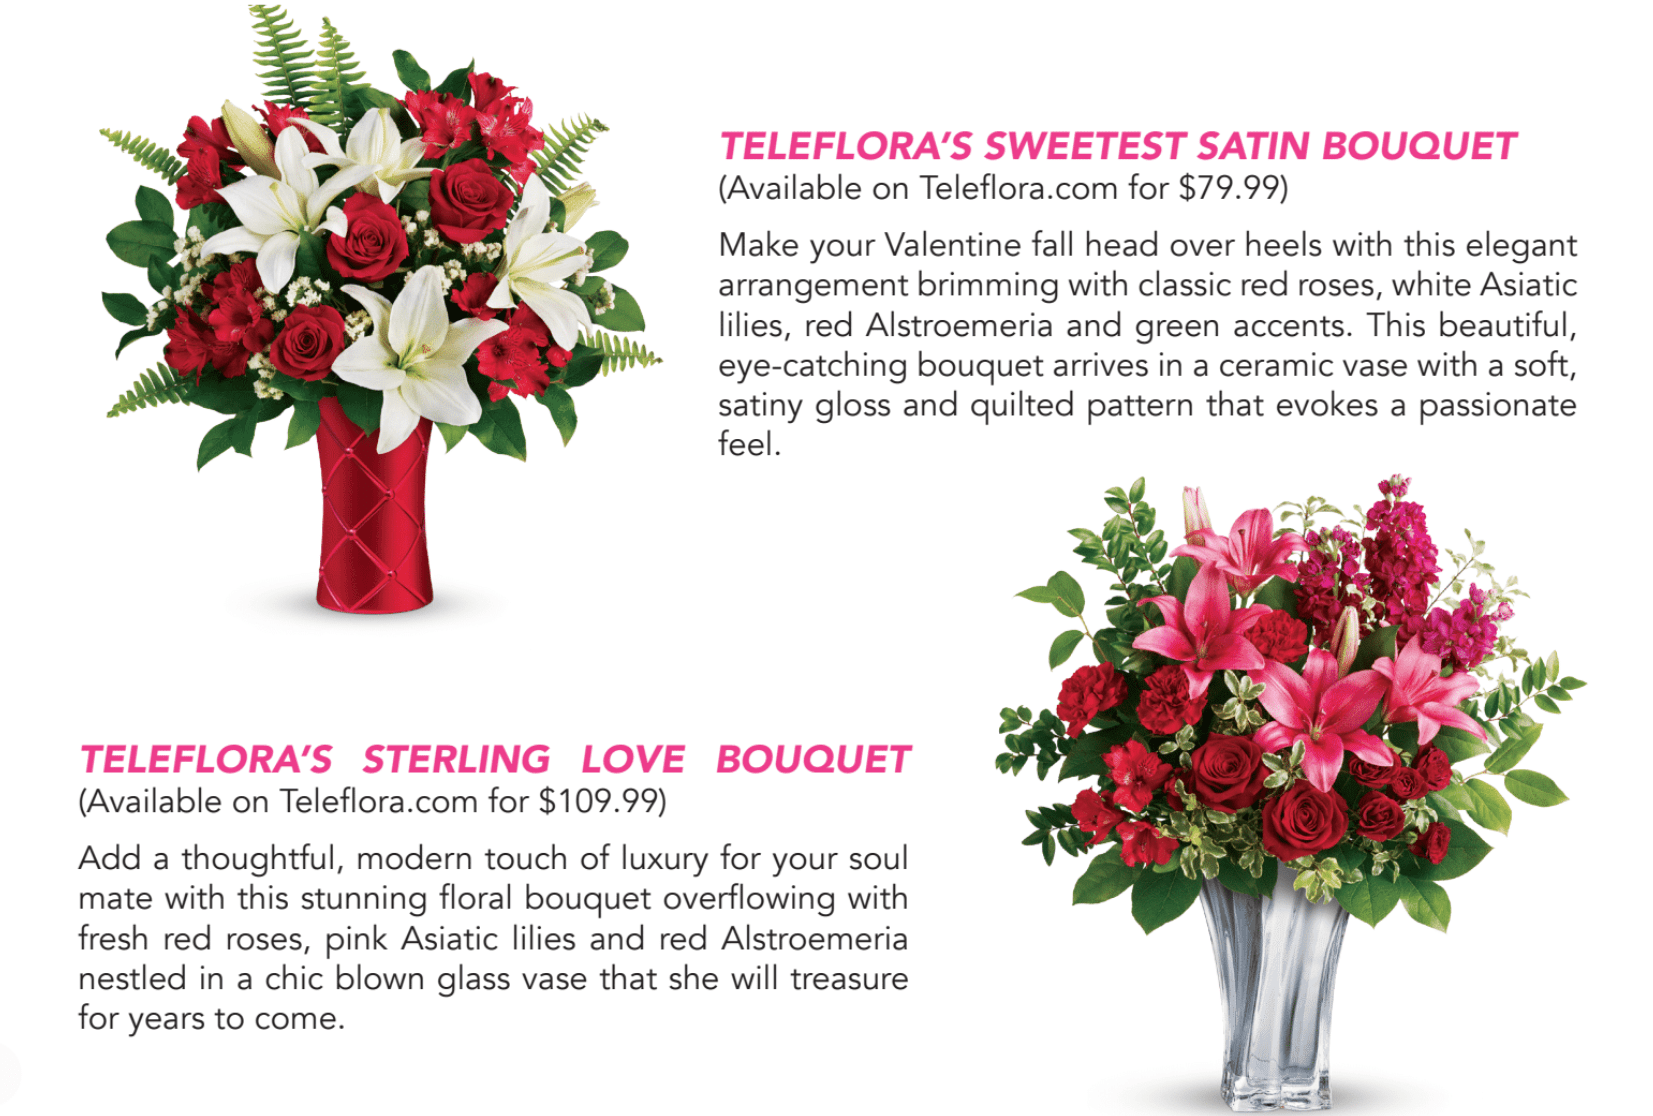 Teleflora Valentine's Day 2019 Bouquets